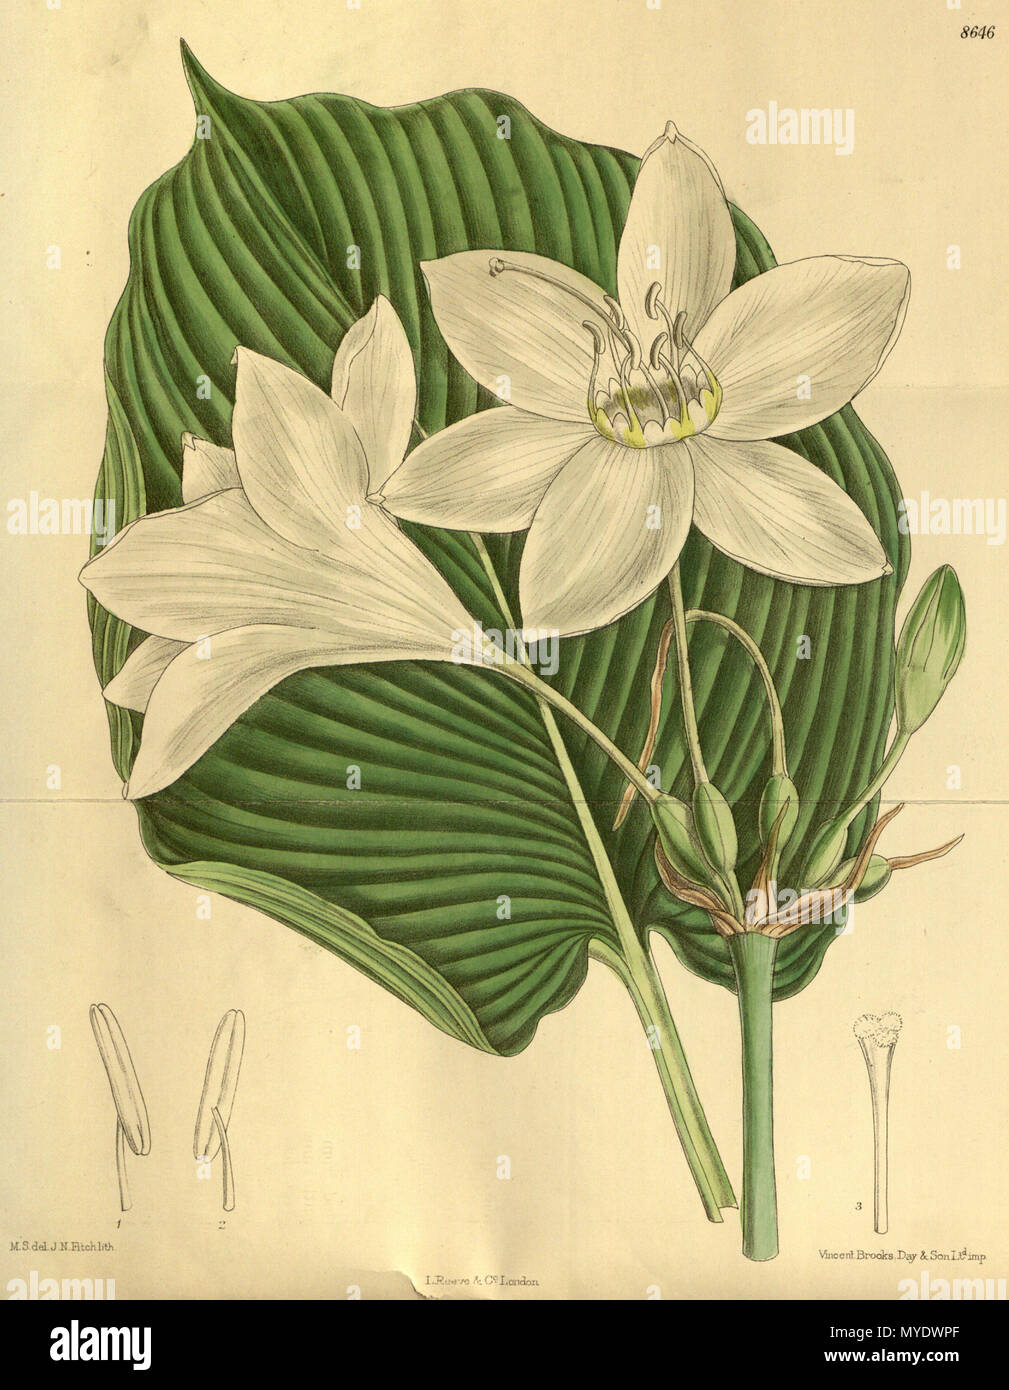 . Eucharis lowii (= Eucharis × grandiflora), Amaryllidaceae . 1916. M.S. del., J.N.Fitch lith. 170 Eucharis lowii 142-8646 Stock Photo